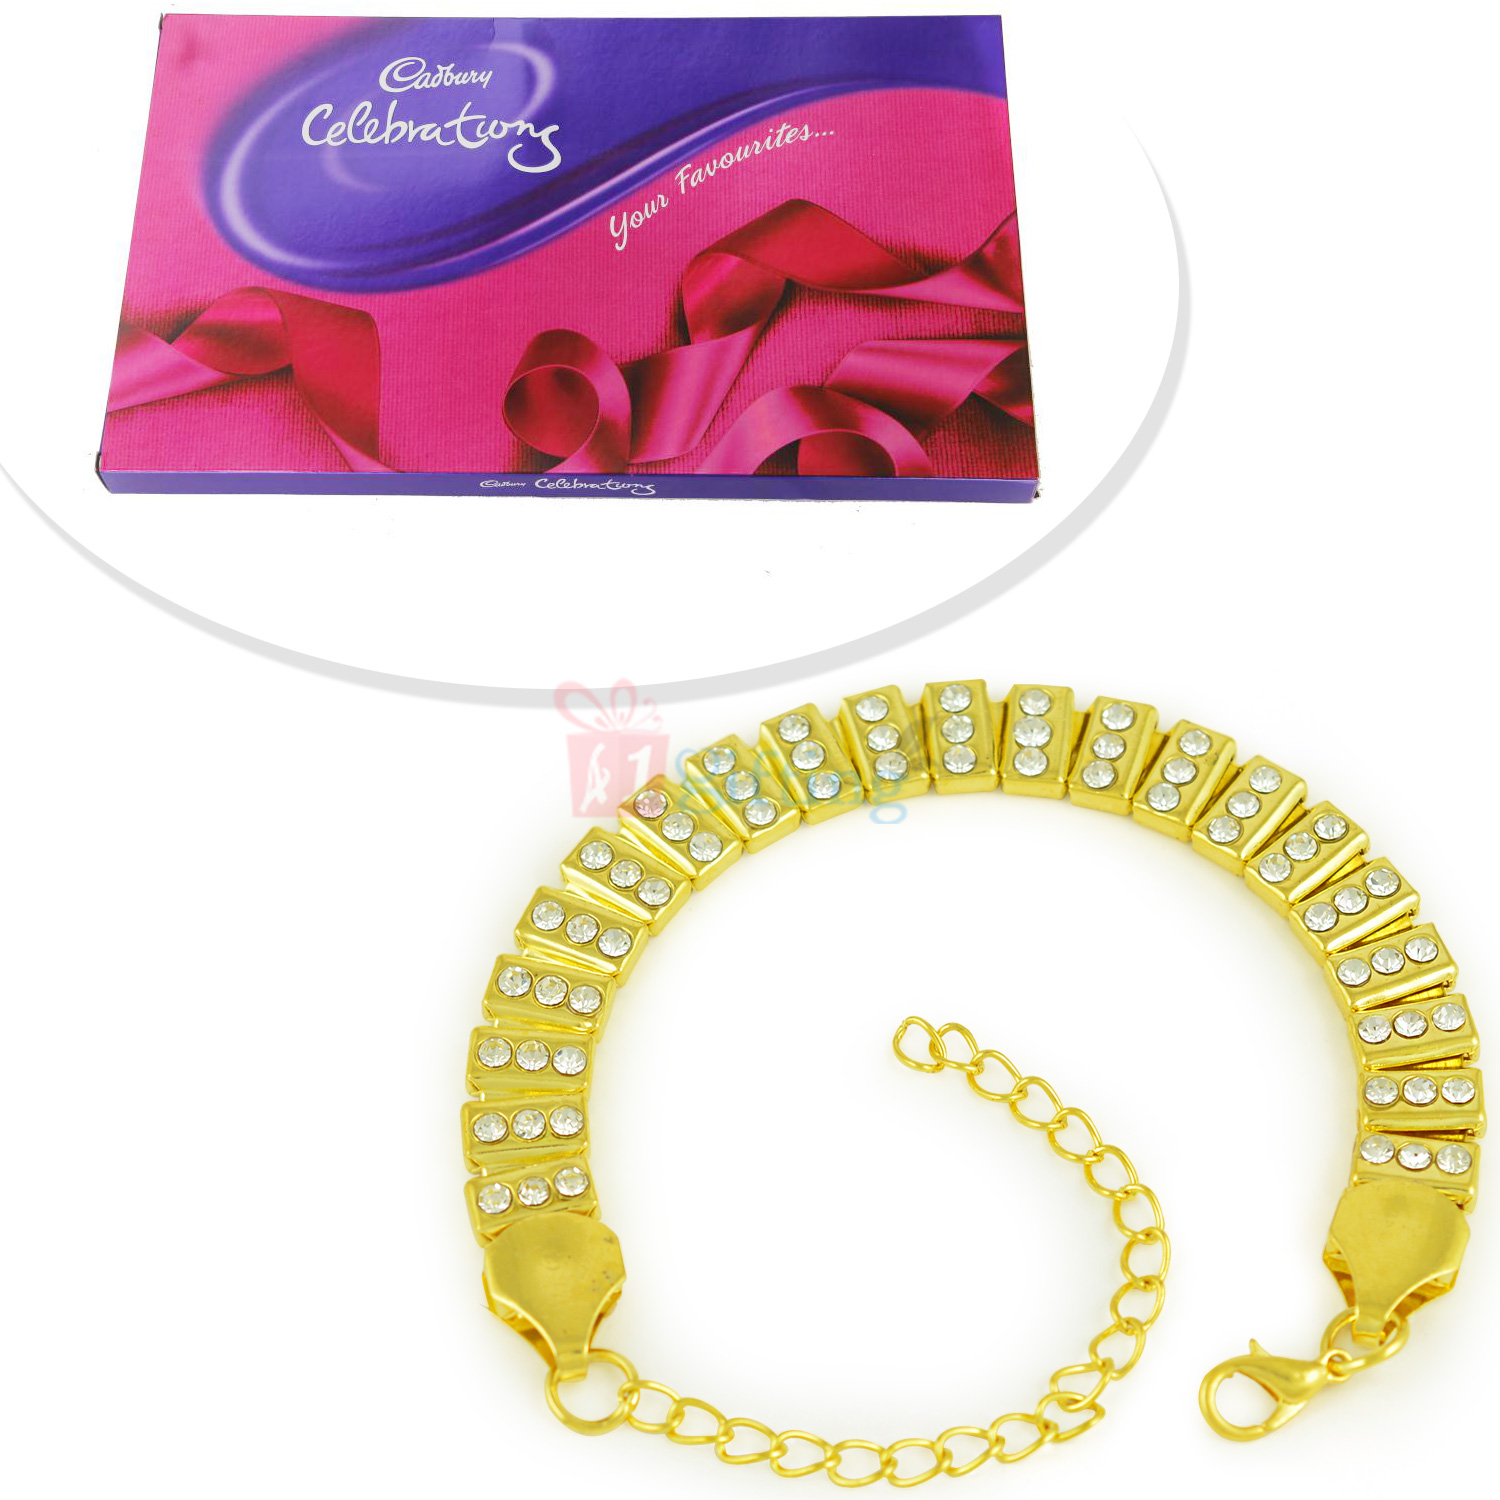 Jewel Studded Wrist Bracelet with Big Cadbury Celebration Pack